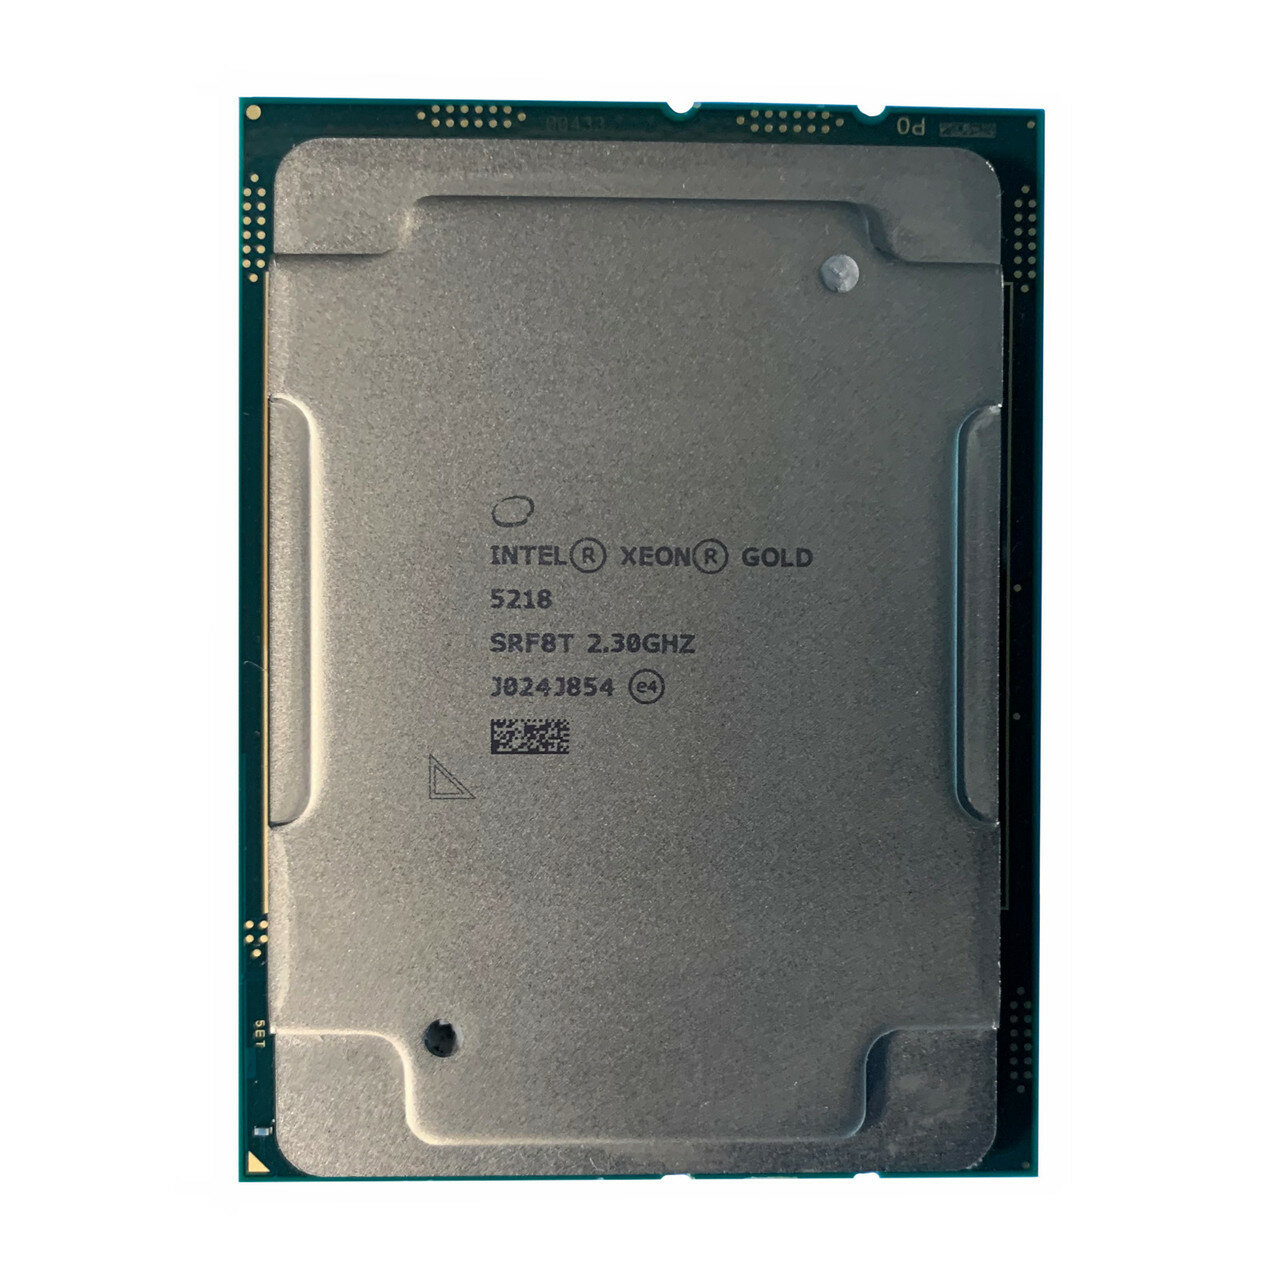 Серверный процессор Intel Xeon Gold 5218 16Core 2.3GHz SRF8T